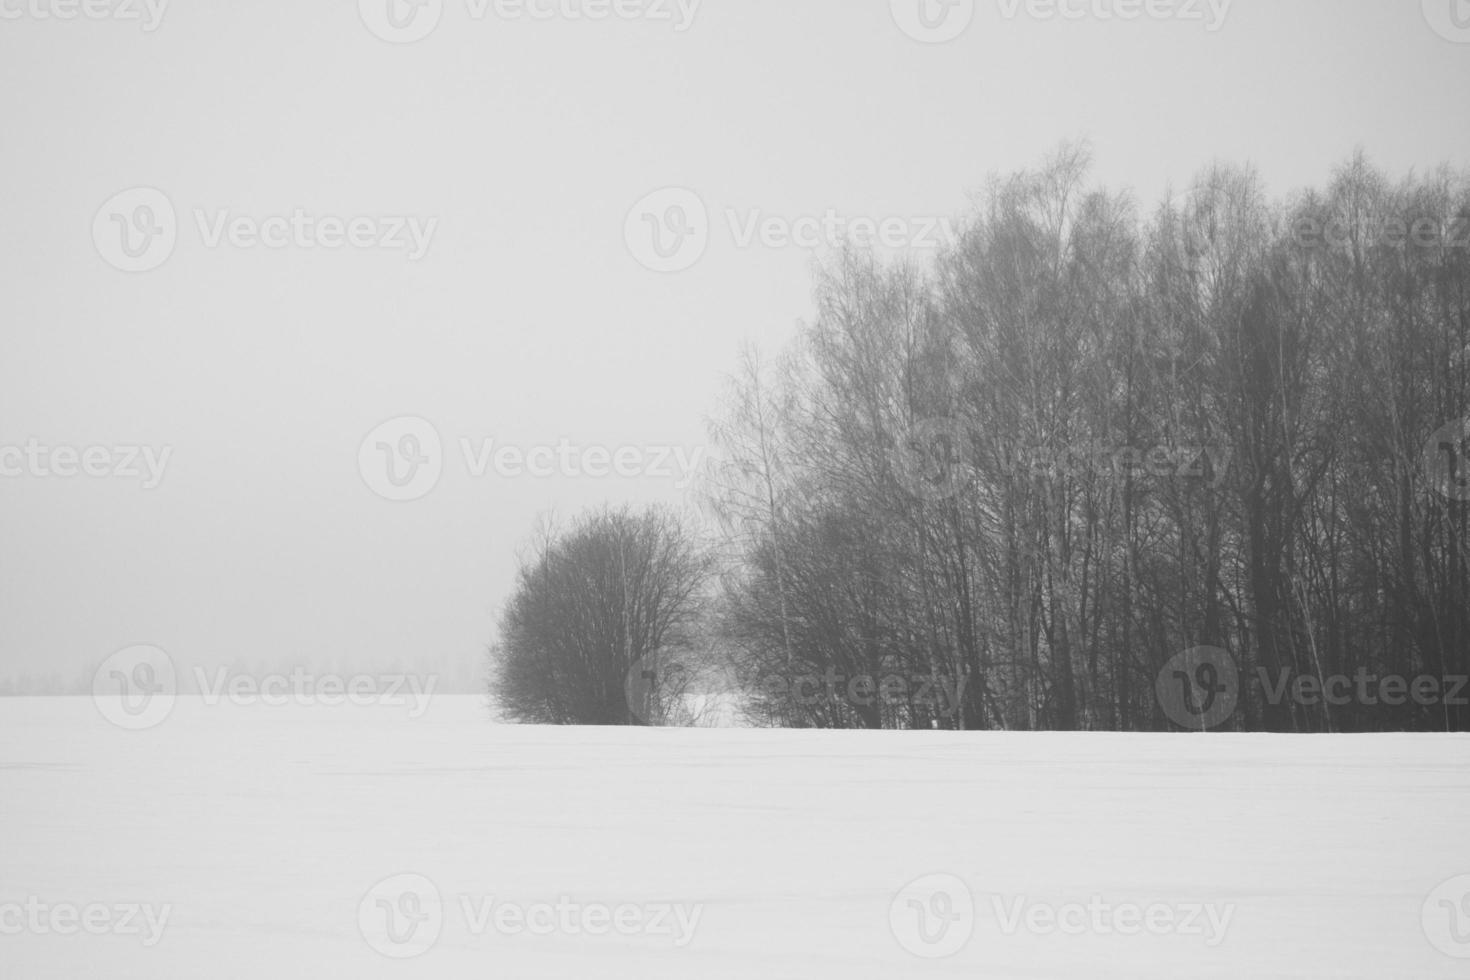 foto paisaje invernal nieve y árboles desnudos.